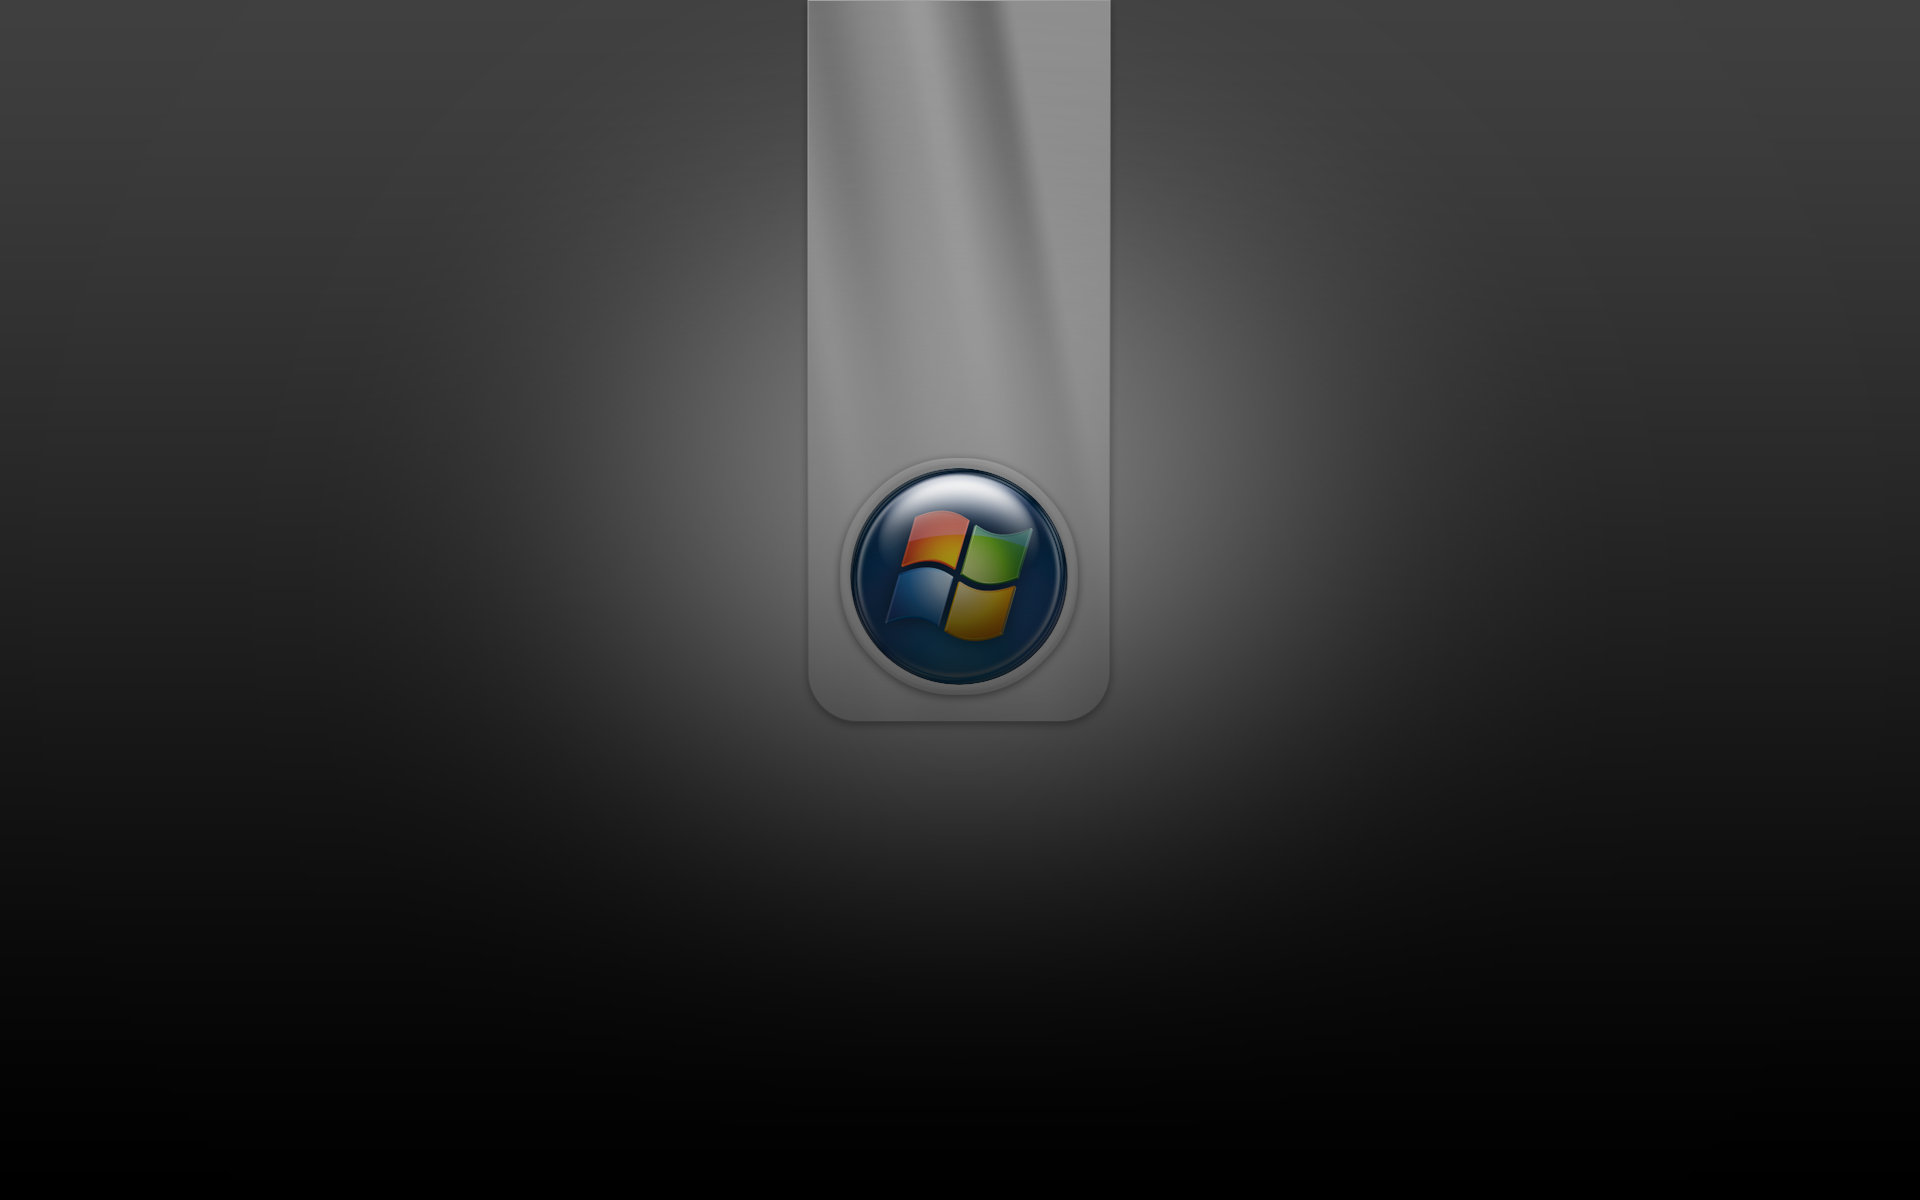 hal, Microsoft Windows, logos - desktop wallpaper